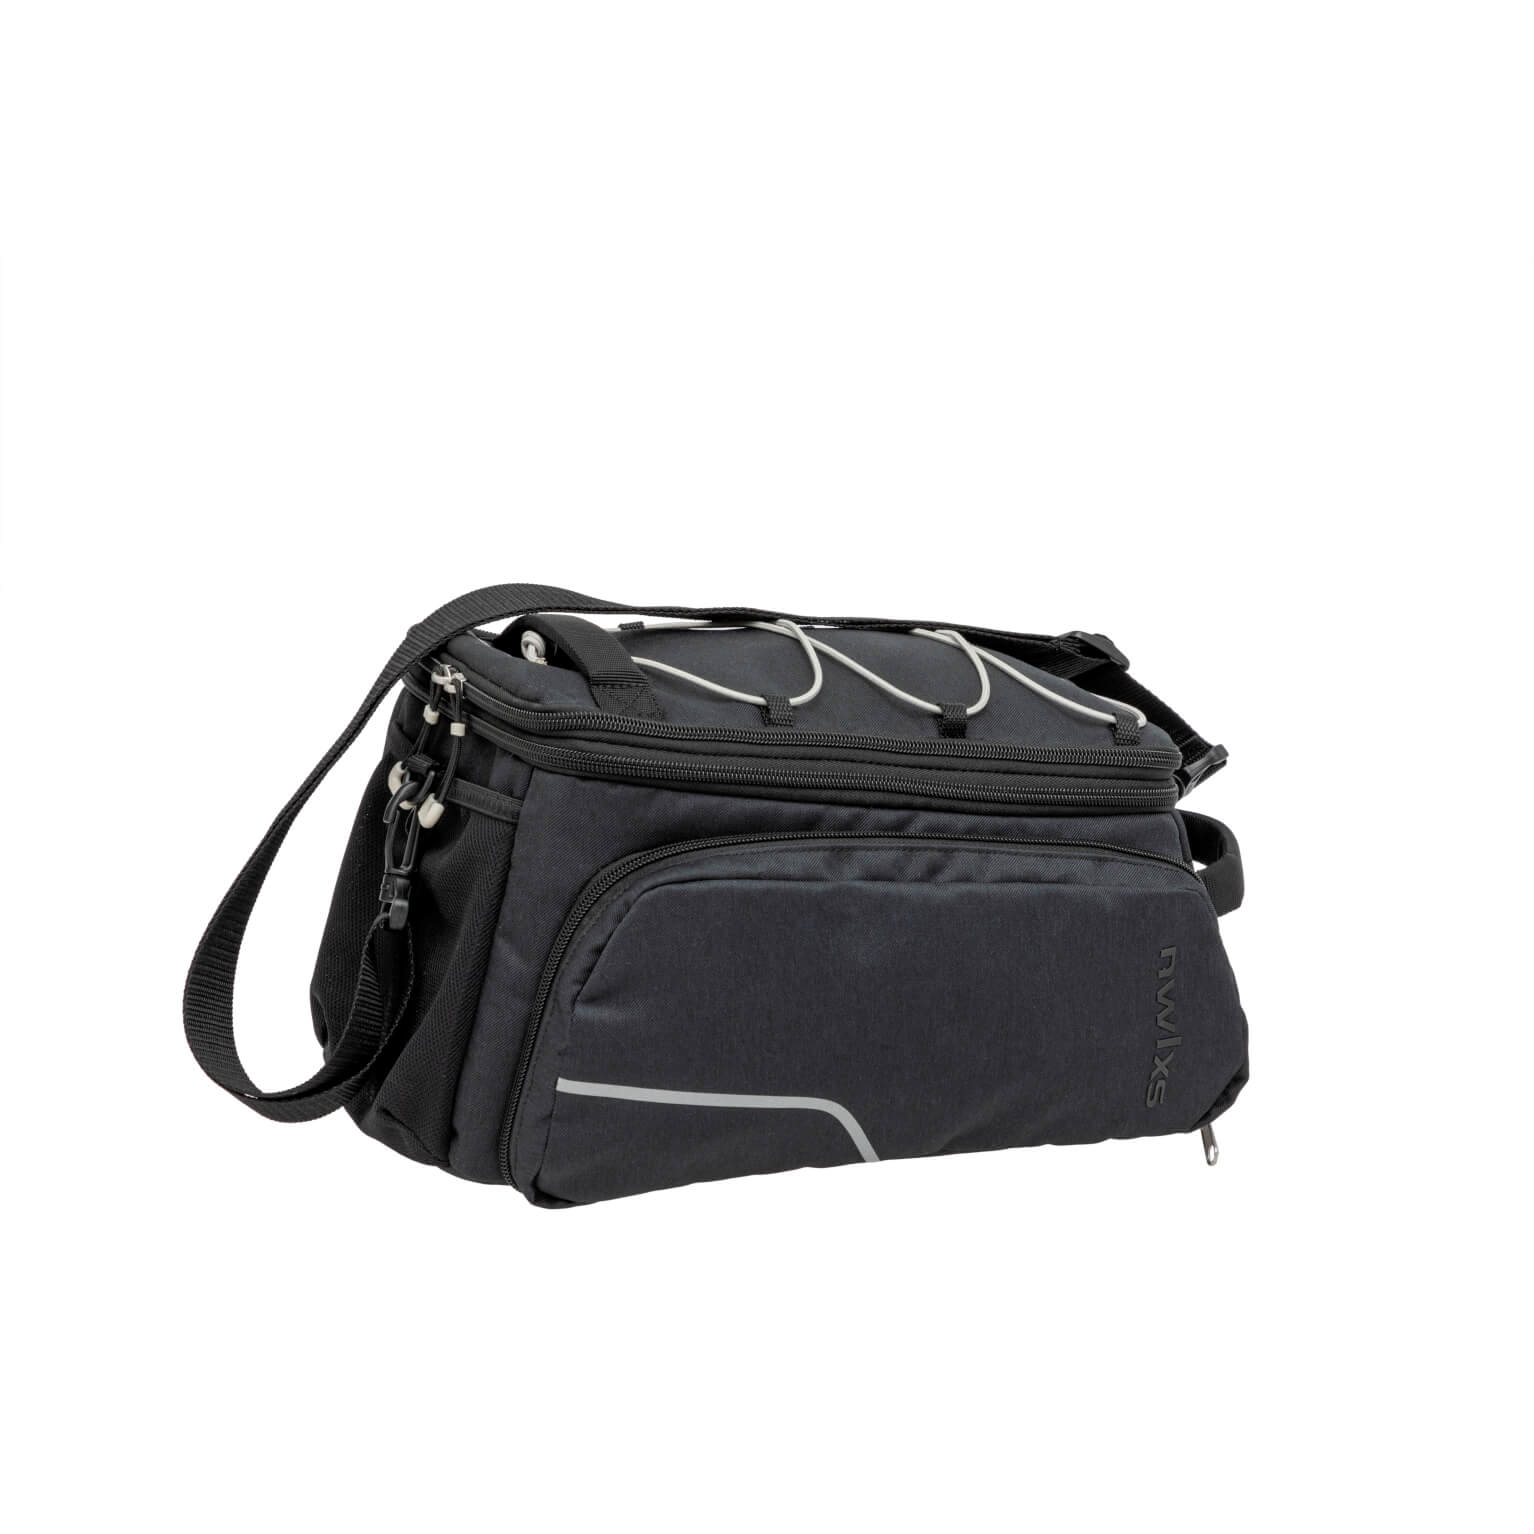 Bag new looxs sports trunk bag mik black